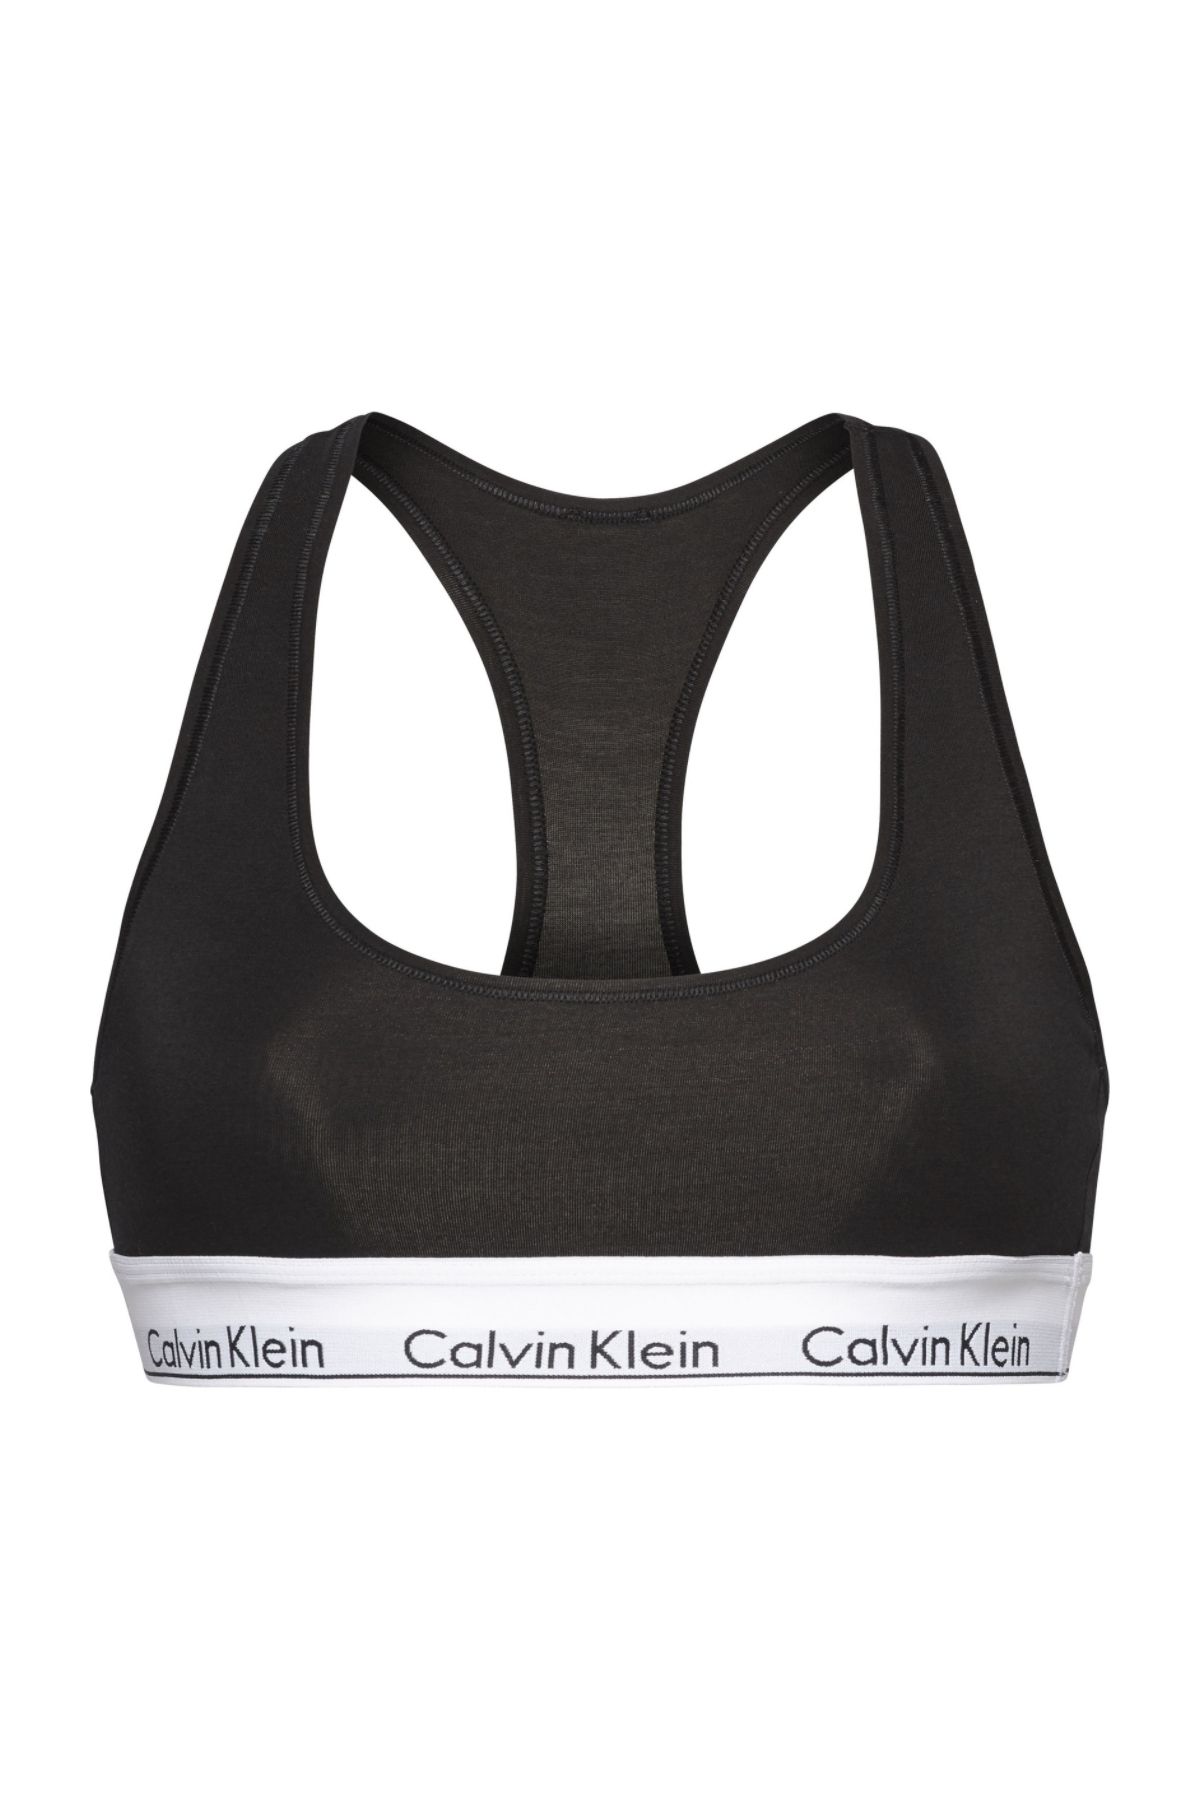 Calvin Klein Women's Black Sports Bra with Brand Logo and Elastic